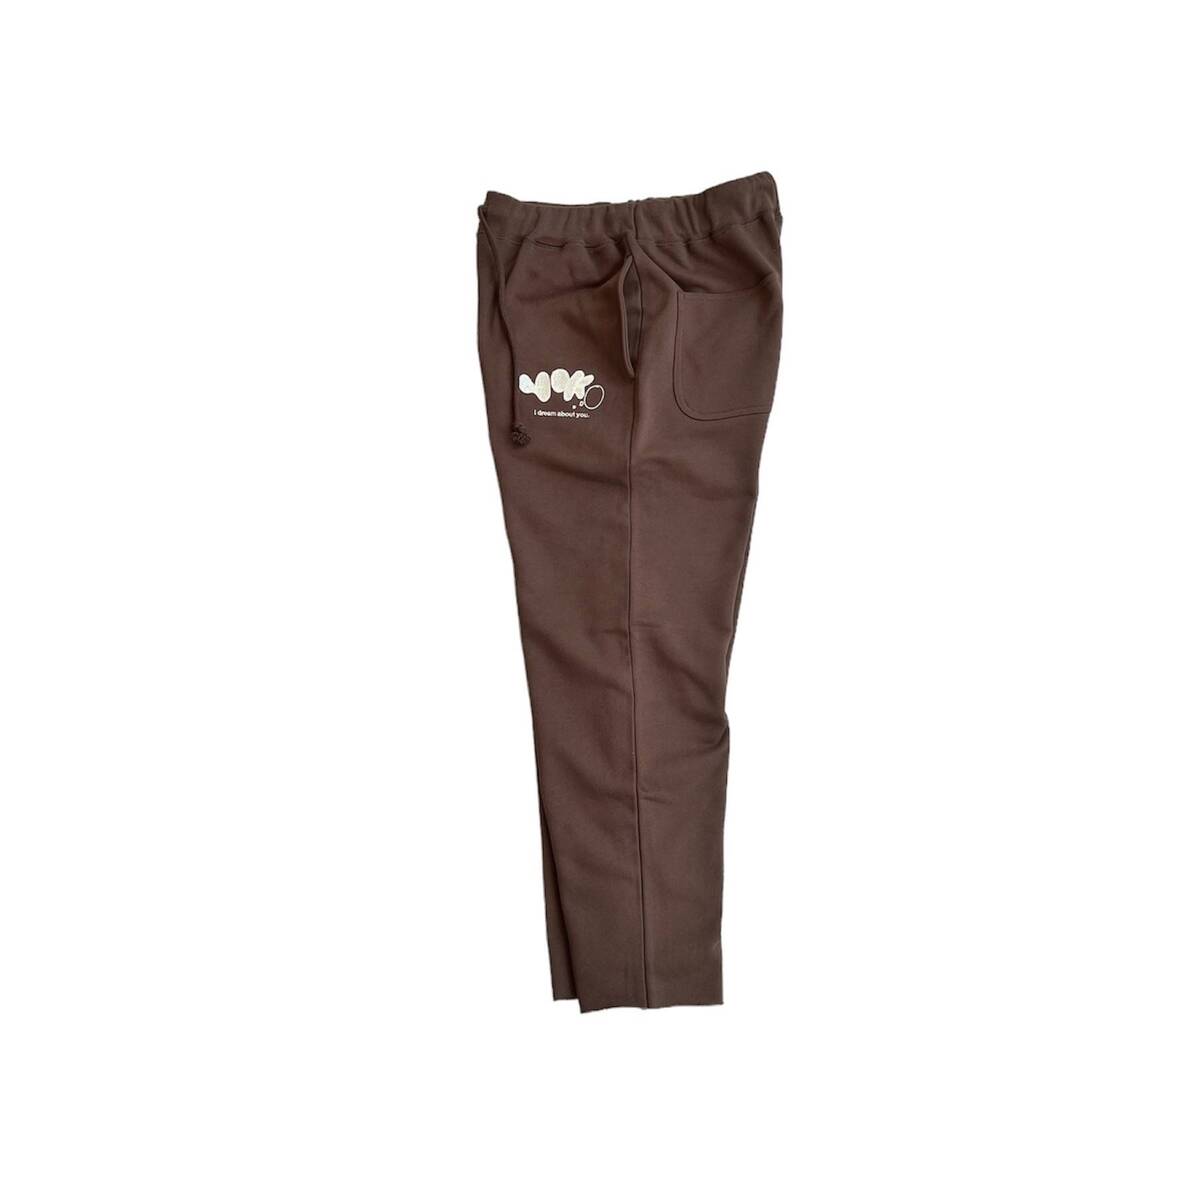 TODAY edition "YOKO" sweat pants -brown 1